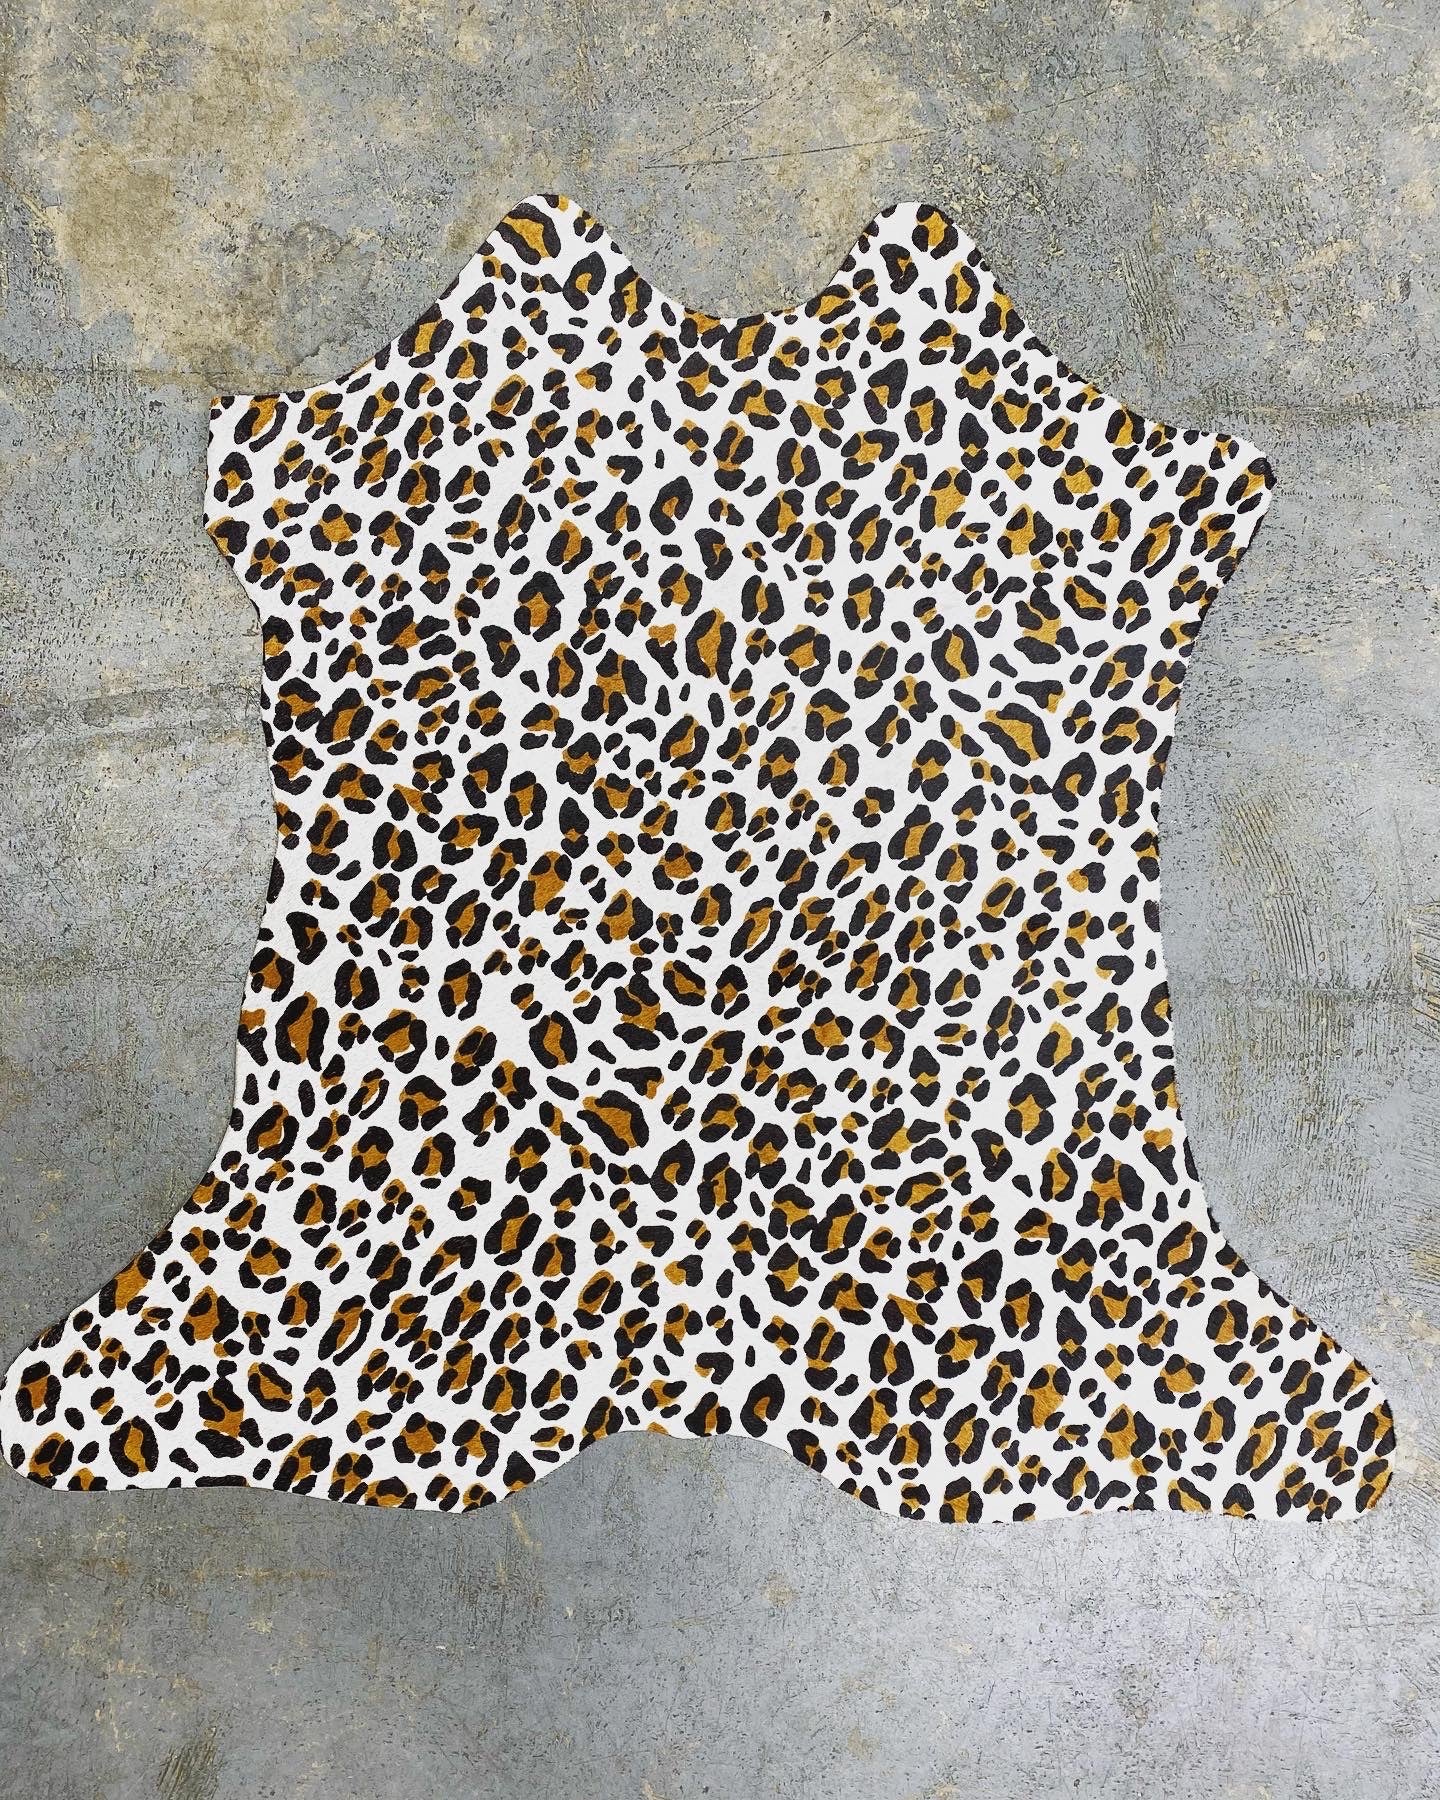 Leopard Print on White calve